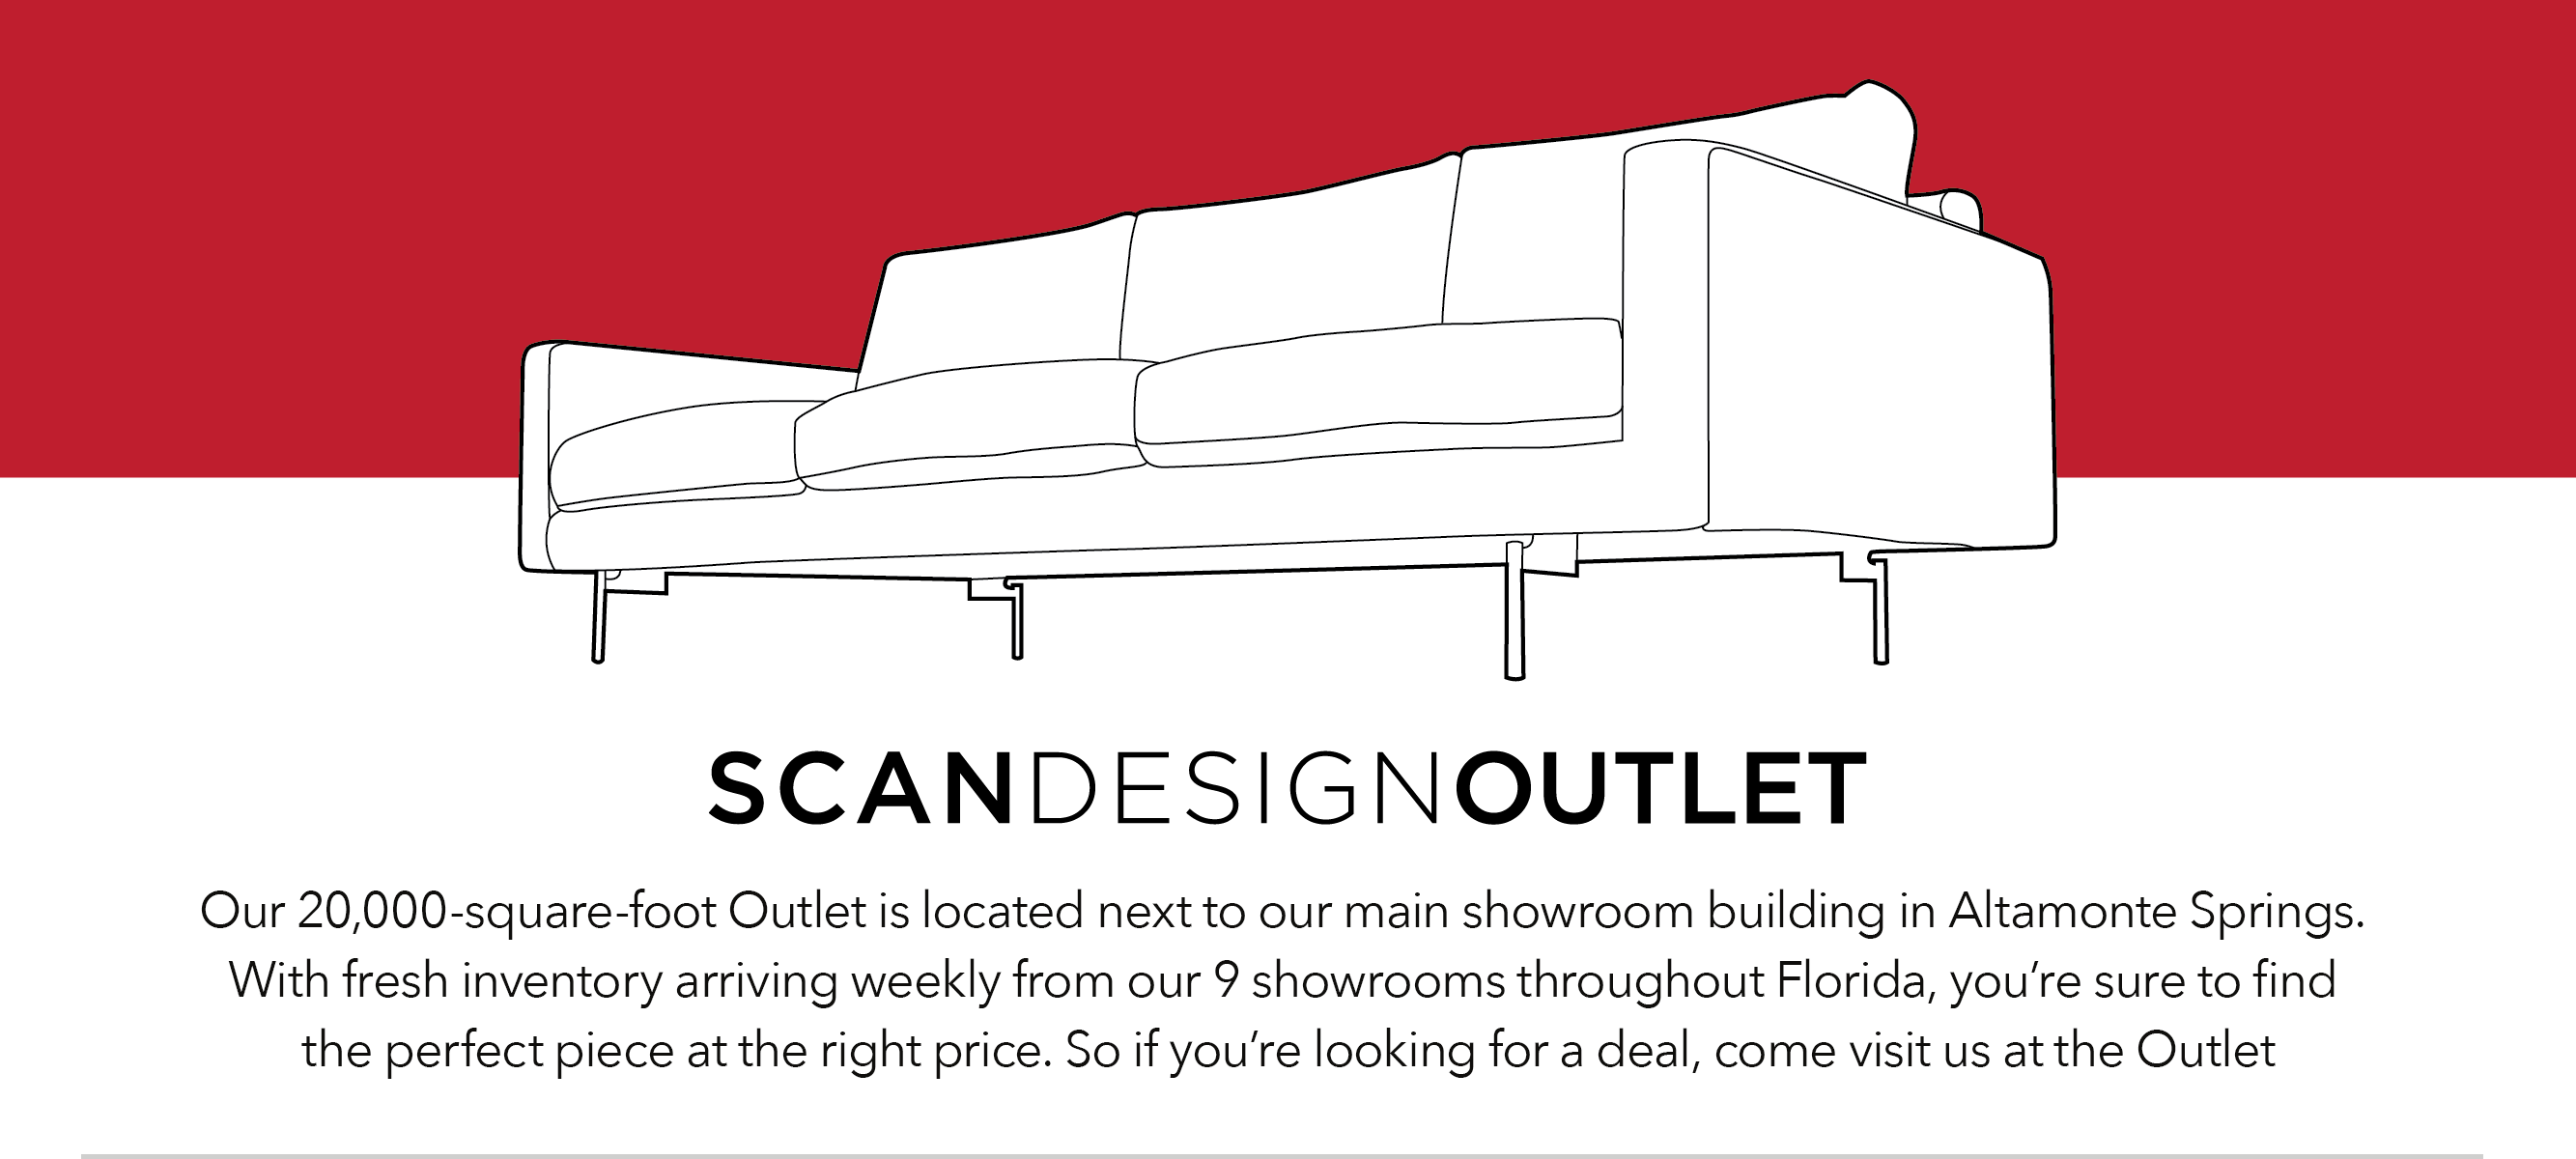 Scan Design Outlet Furniture Scan Design Modern Contemporary